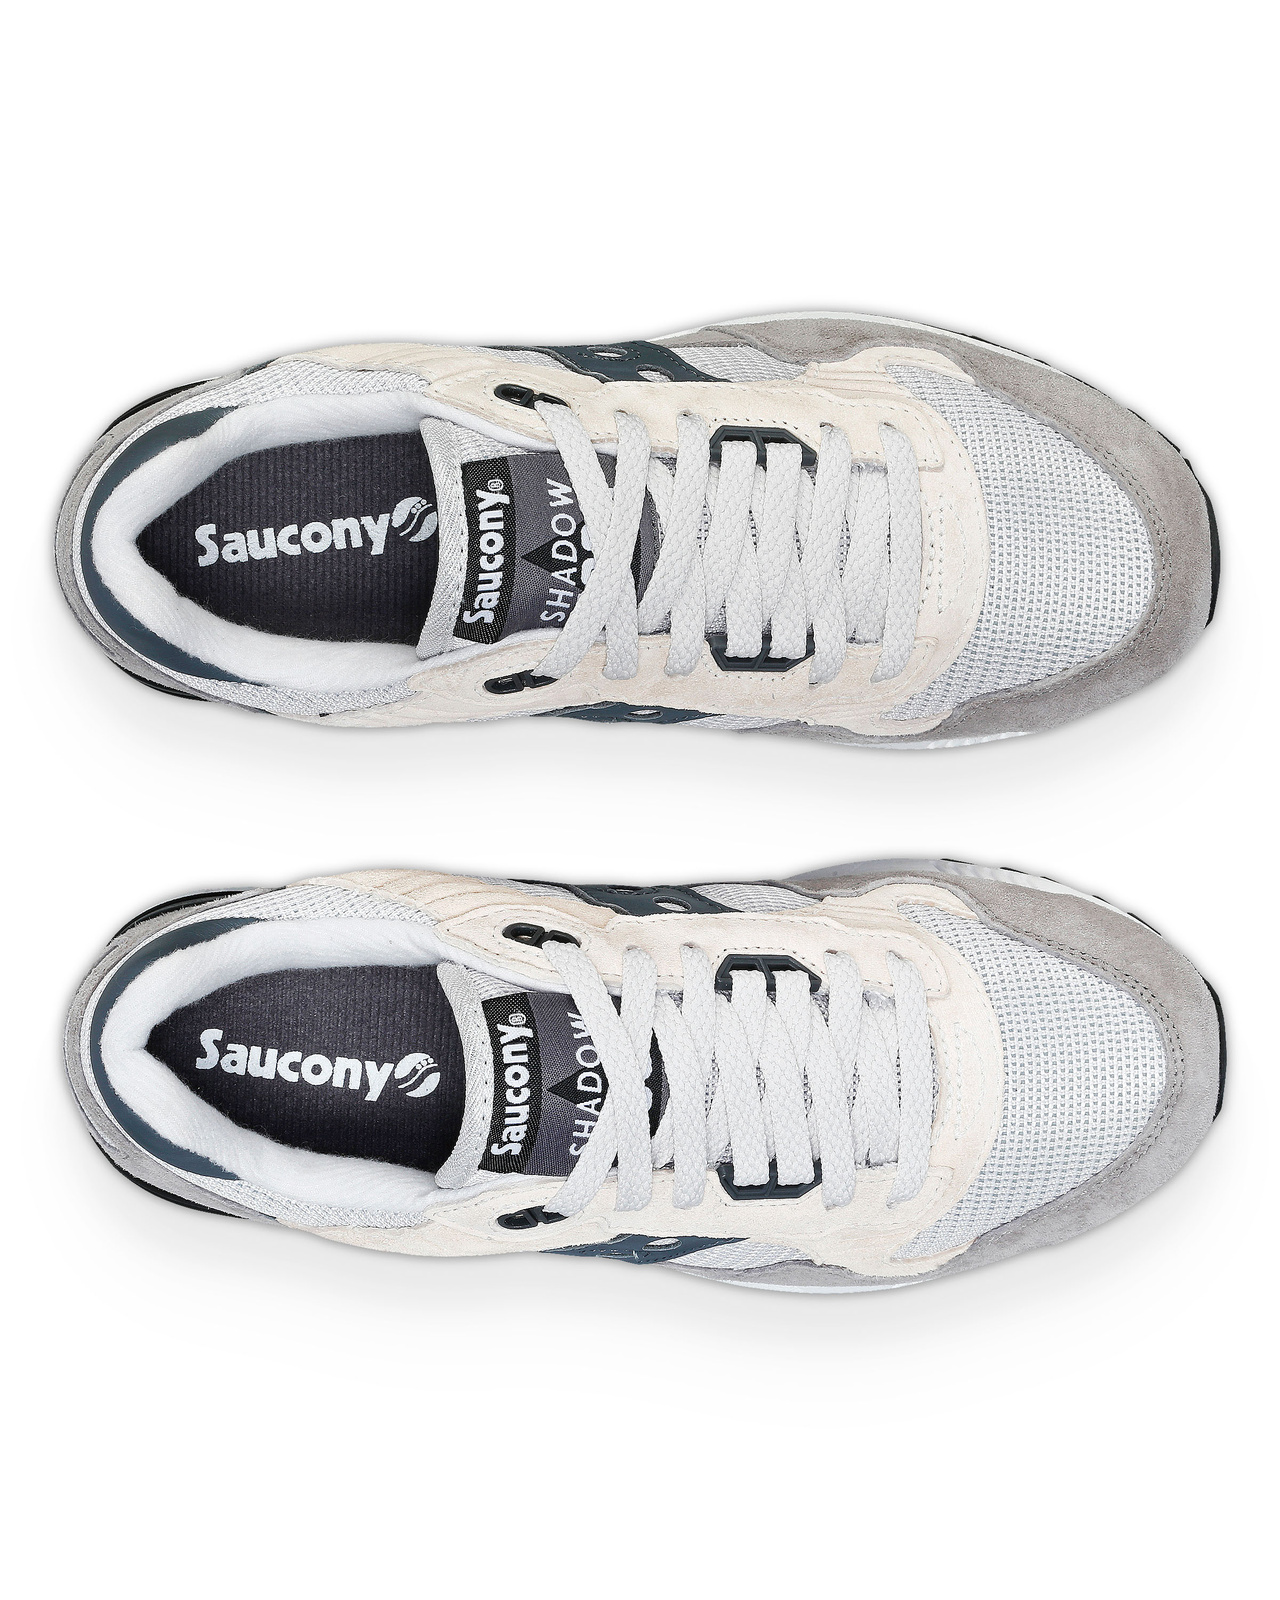 Sneaker Shadow 5000 - Grey/Dark grey - 40